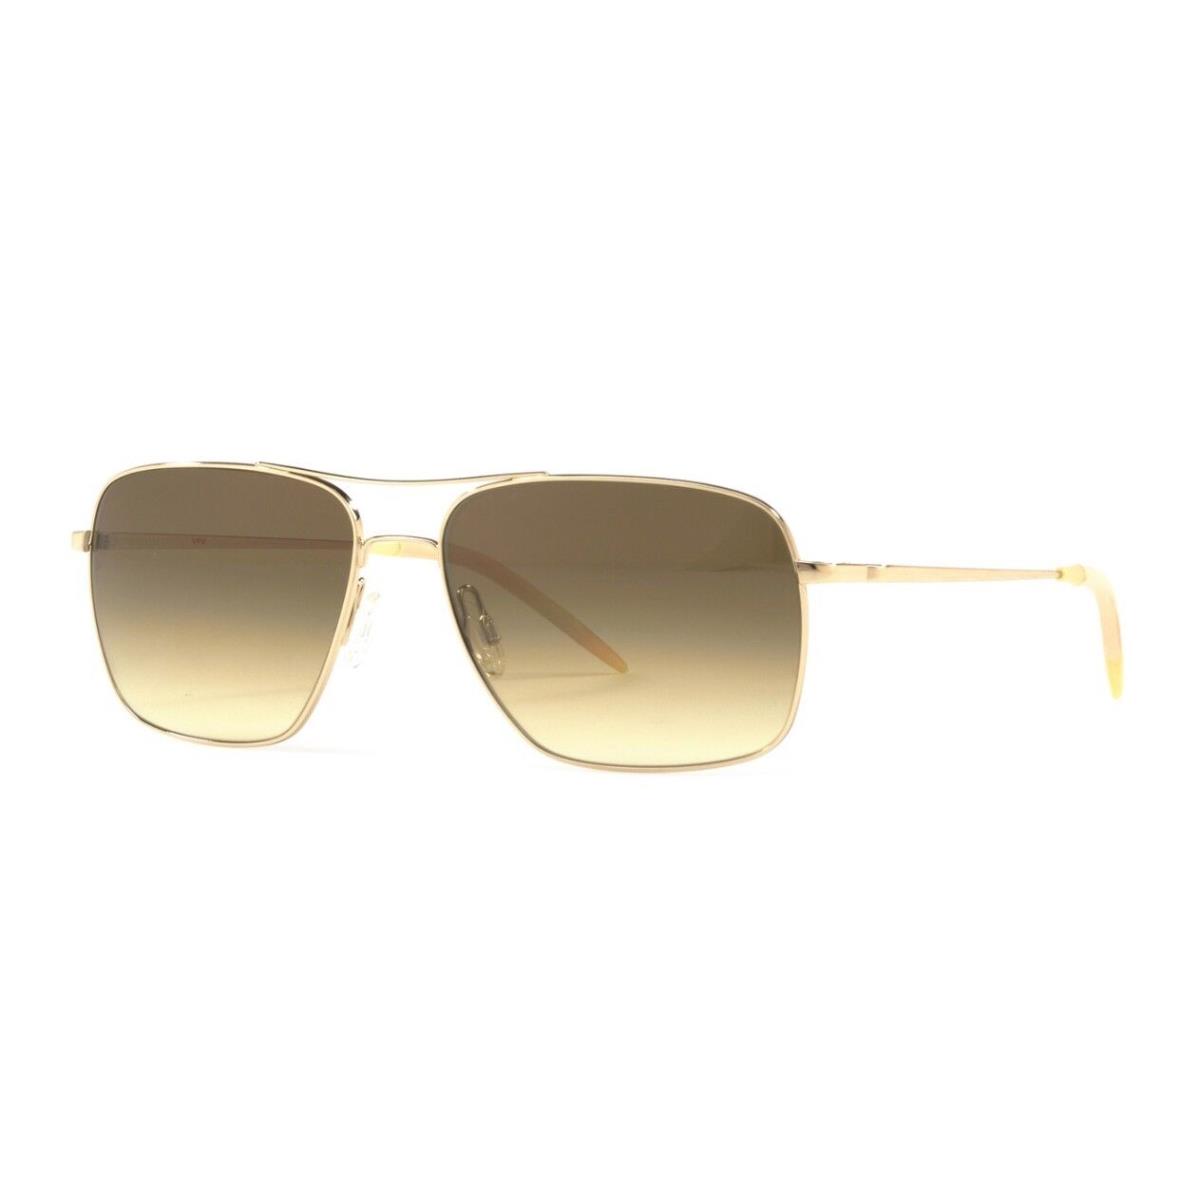 Oliver Peoples Clifton OV 1150S Gold/chrome Olive Vfx 5035/85 Sunglasses - Frame: Gold, Lens: Chrome Olive VFX